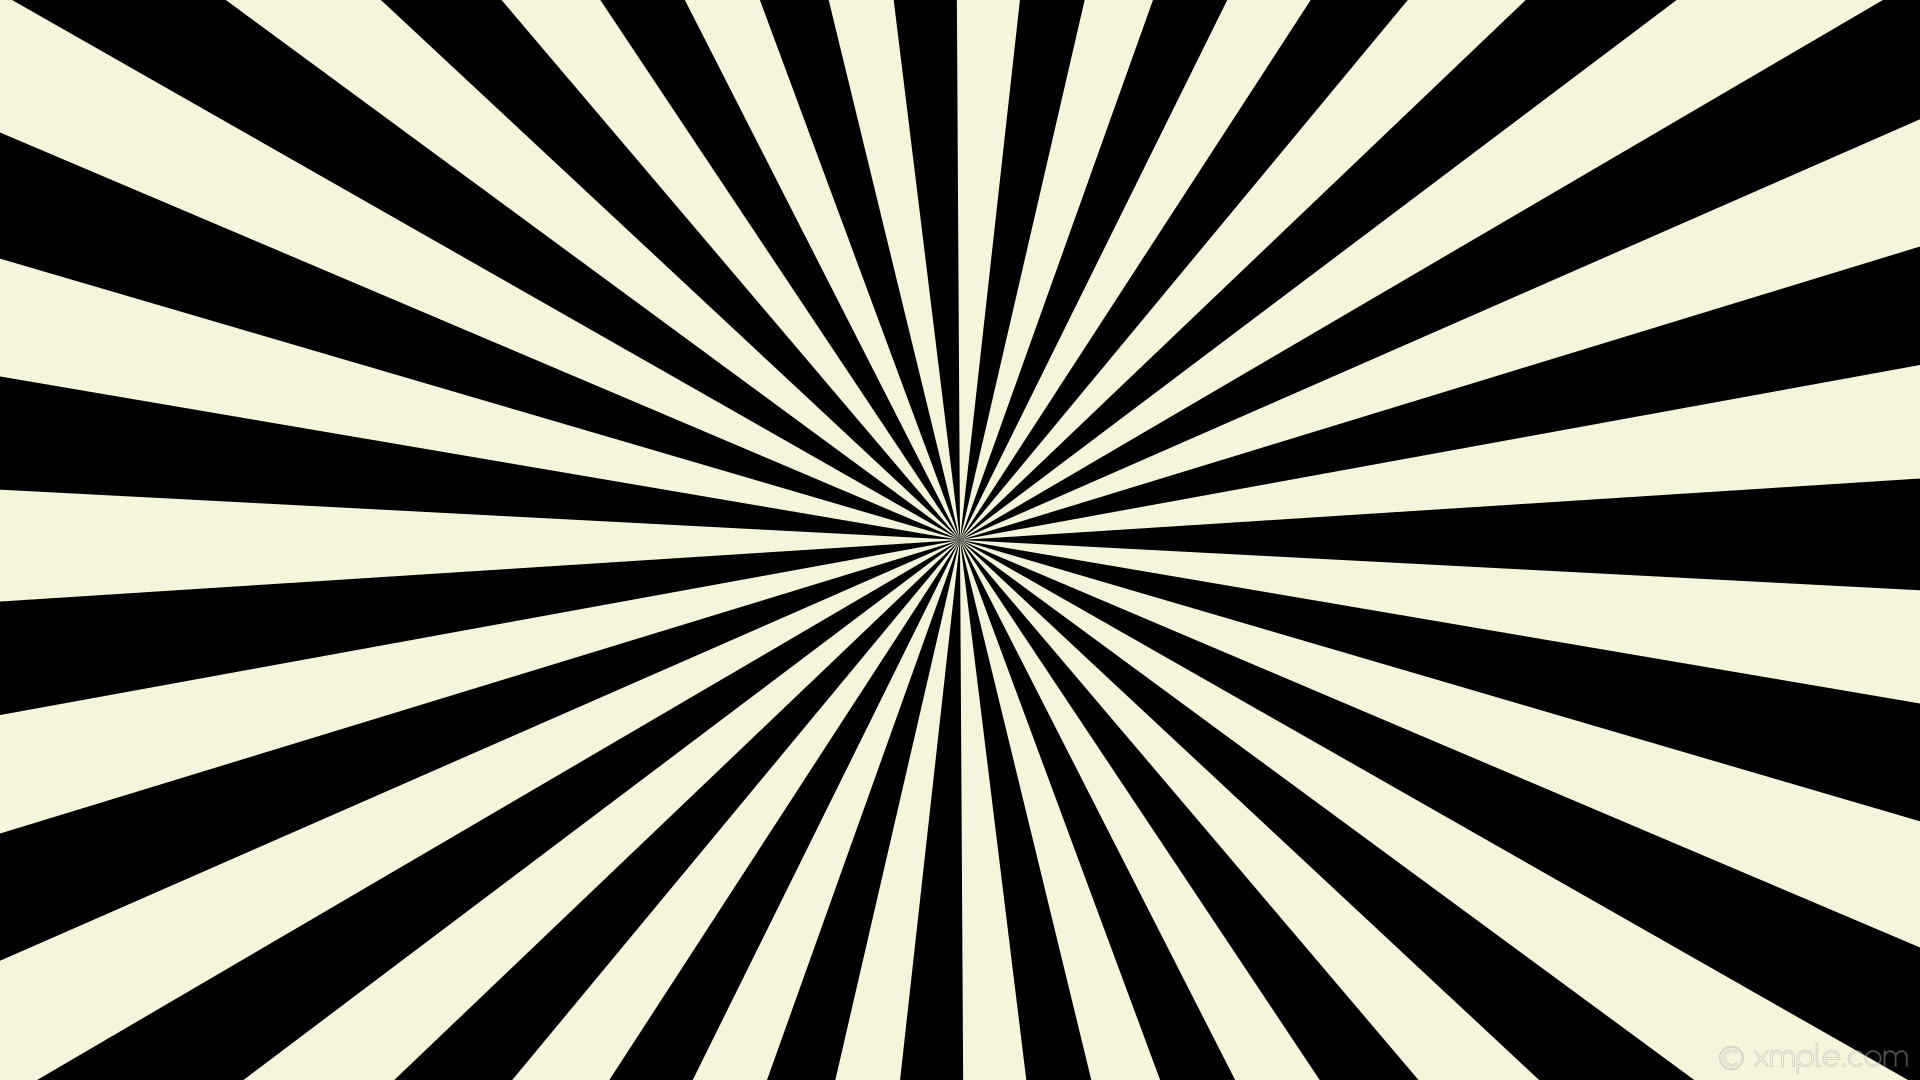 1920x1080 wallpaper white burst sunburst black shadow rays beige #000000 #f5f5dc 3Â°  27 0